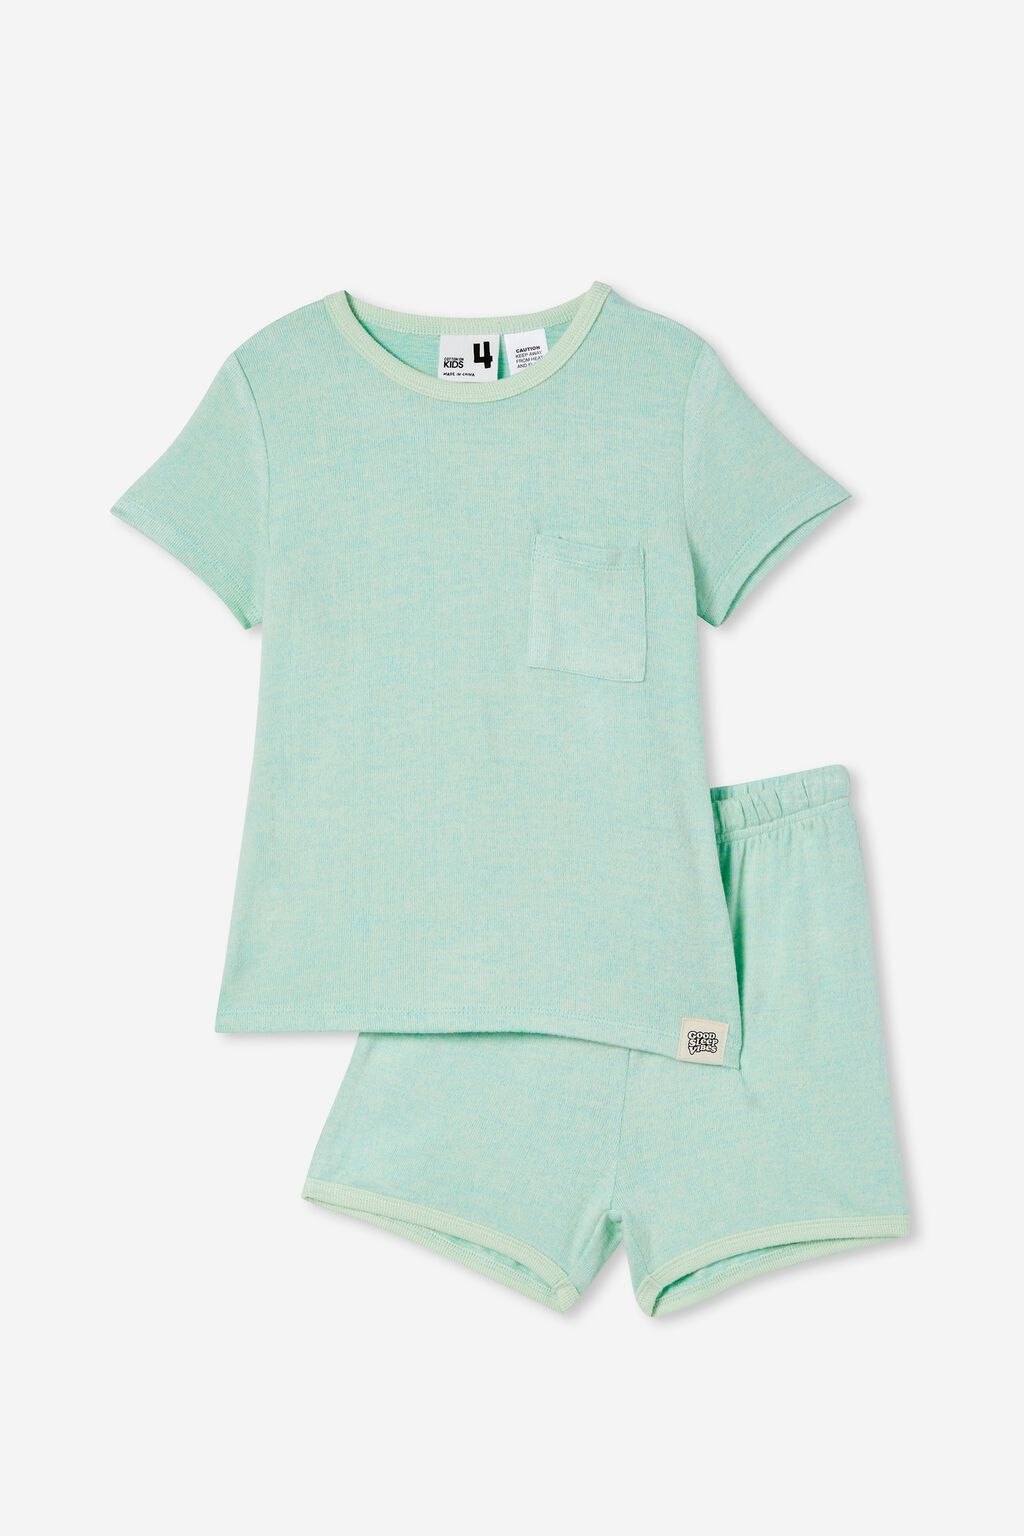 Boys Sleepwear & Pyjamas - Matching PJ Sets | Cotton On Kids